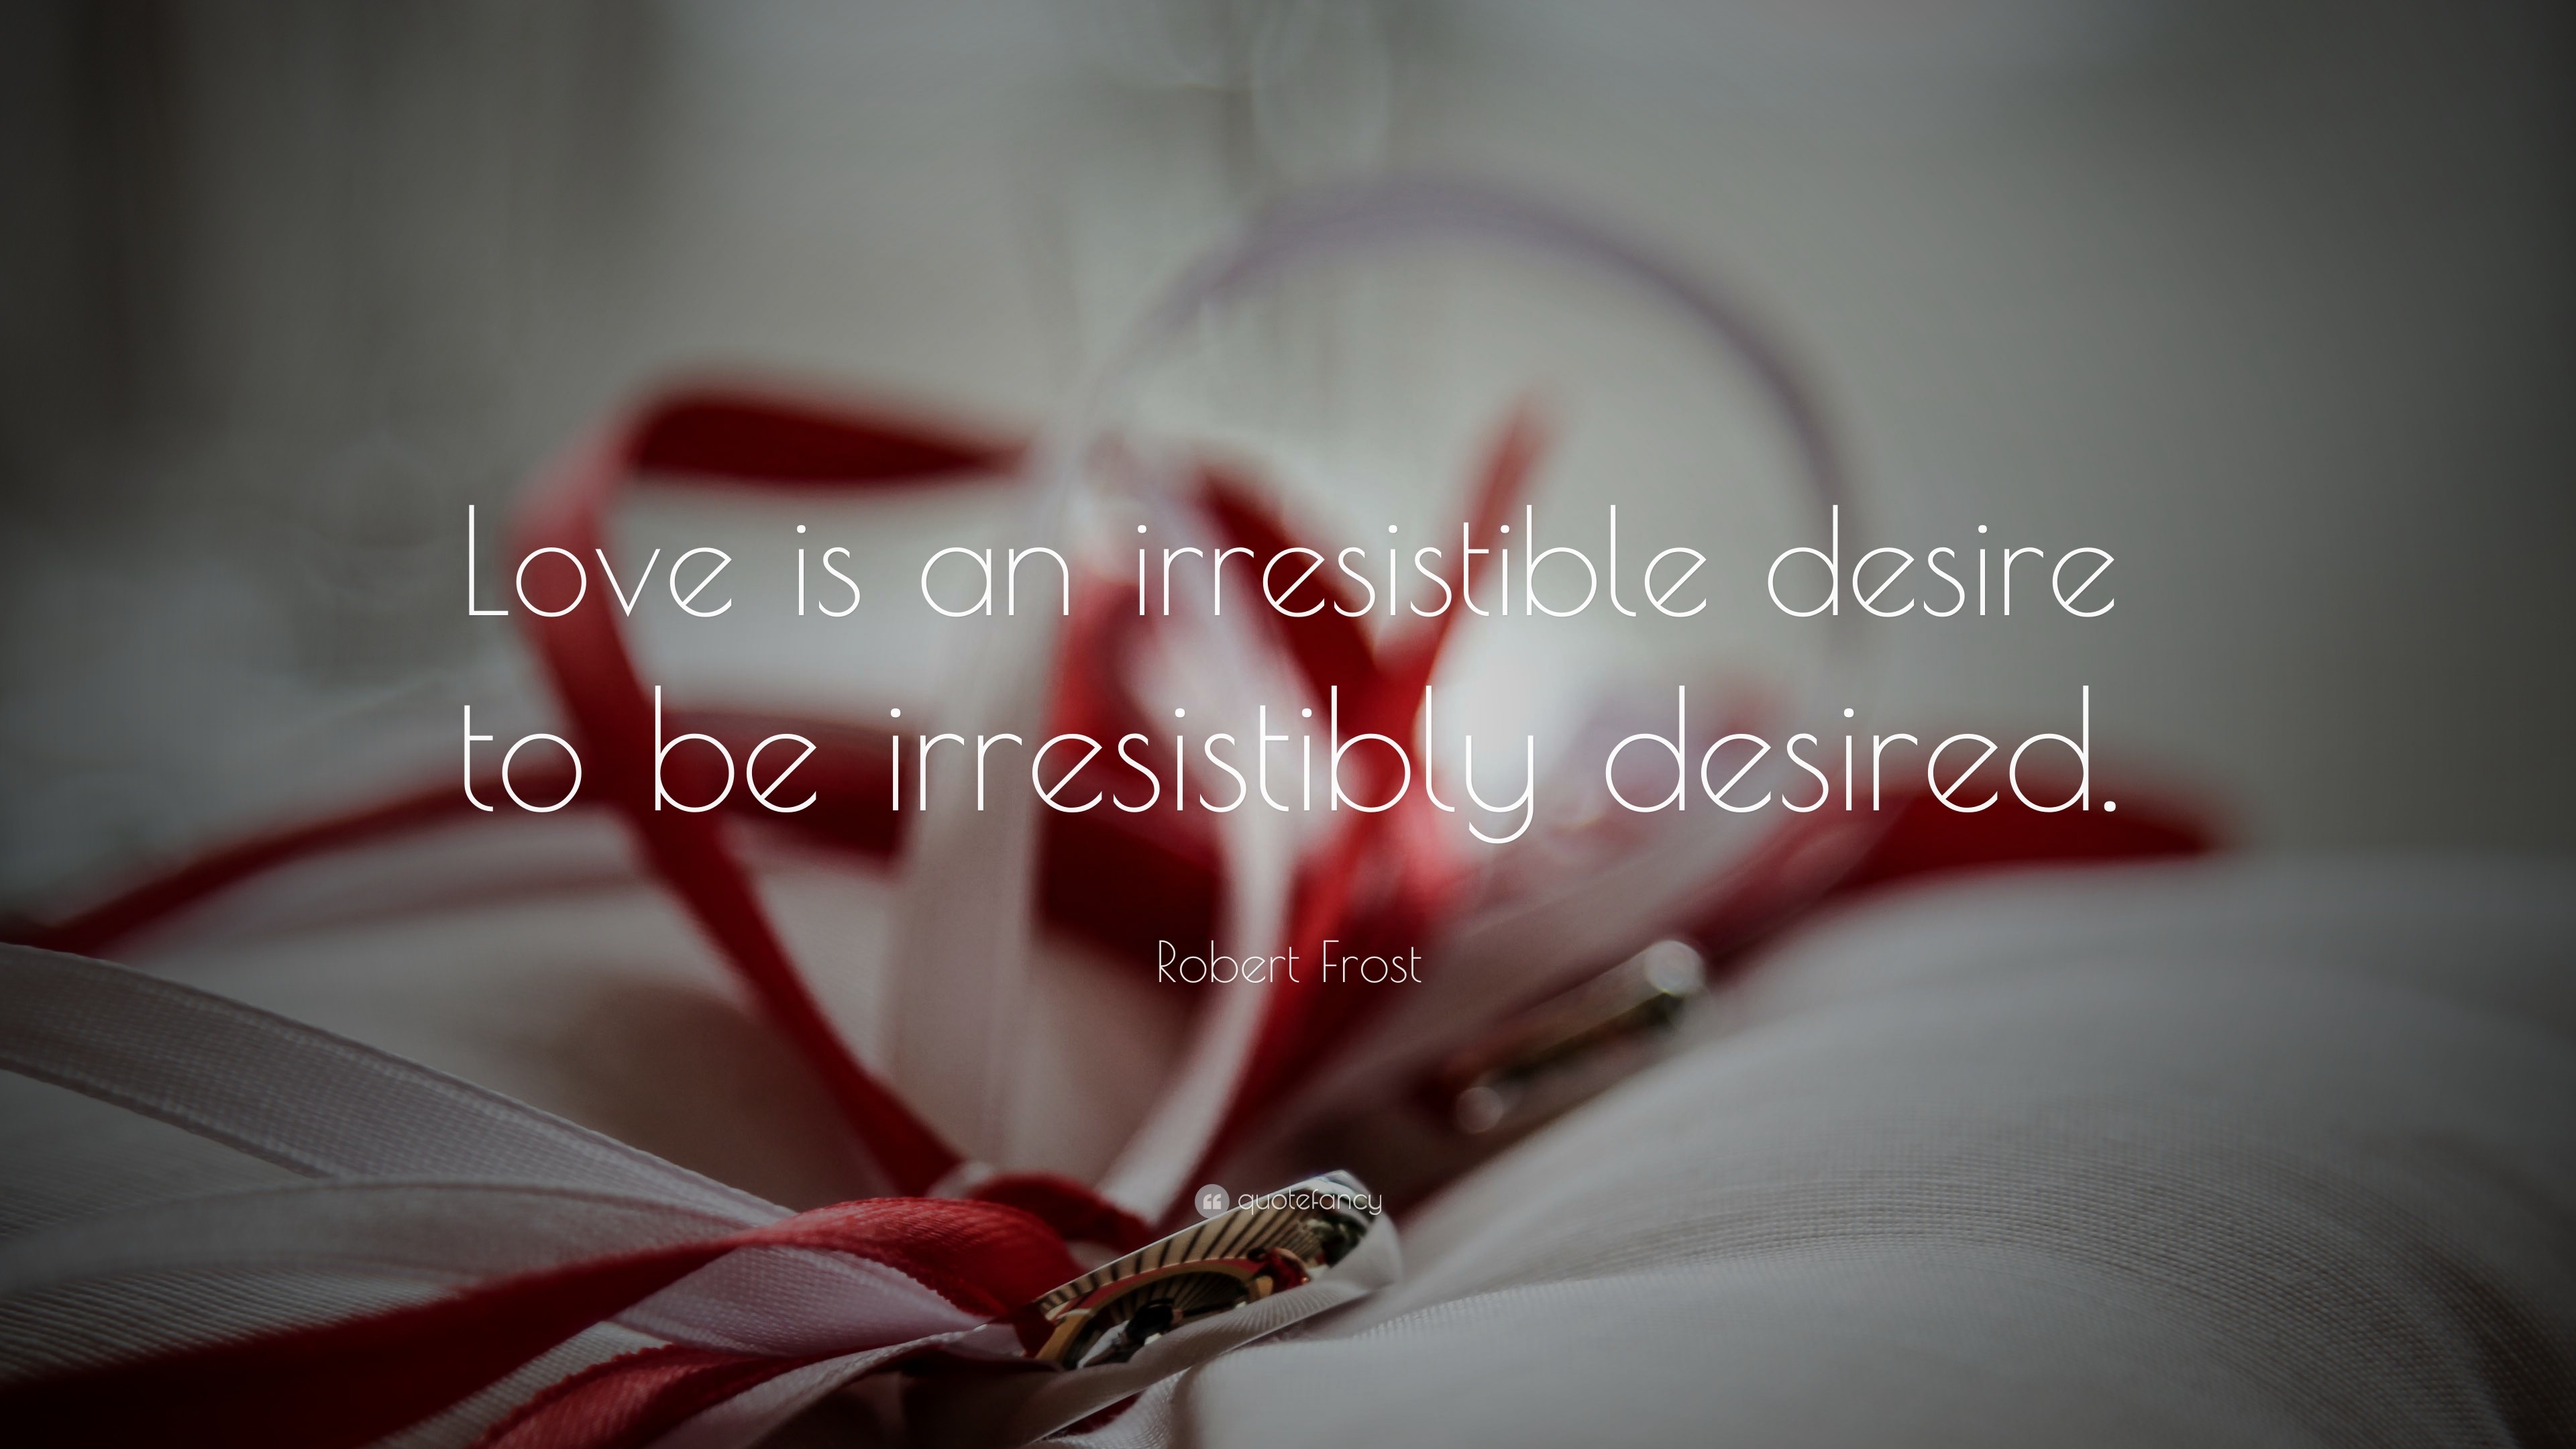 irresistible love